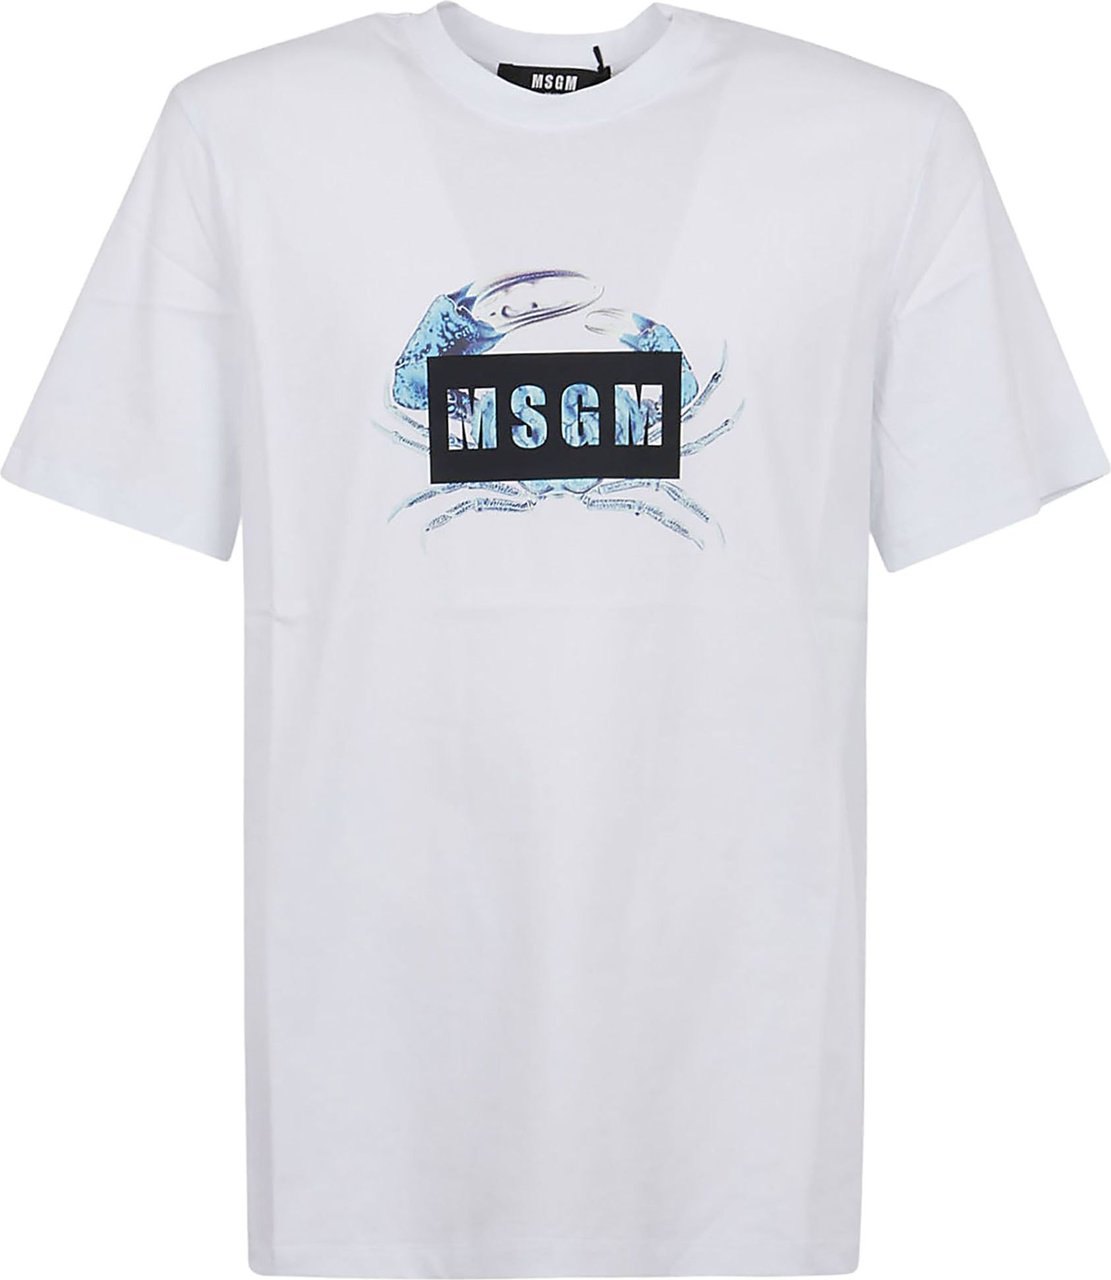 MSGM T-Shirt Wit